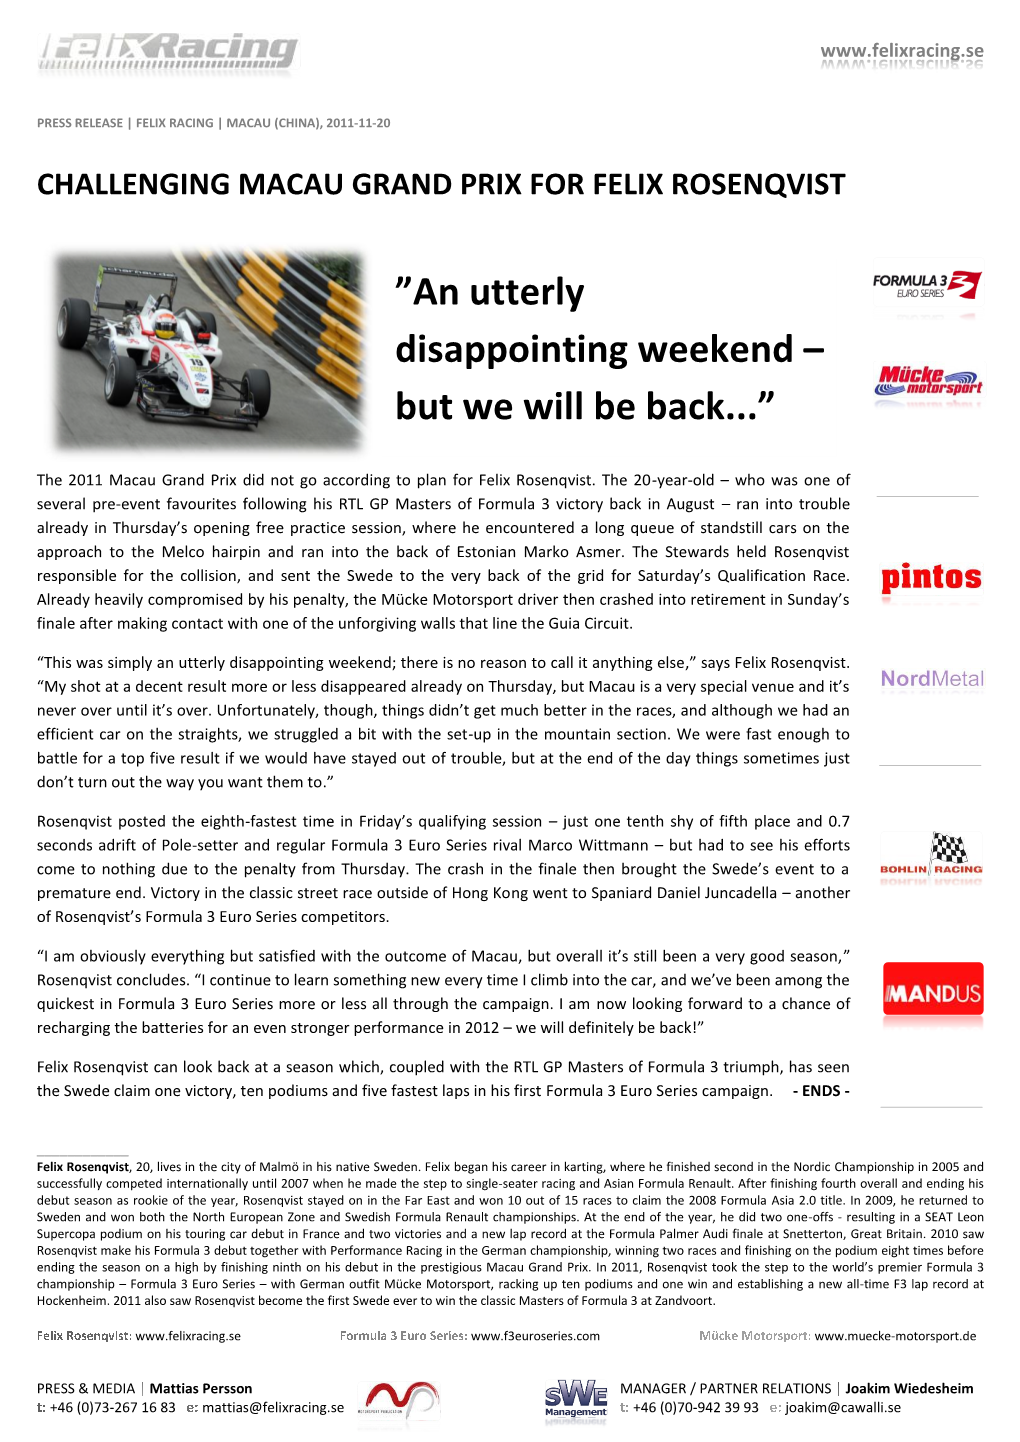 Challenging Macau Grand Prix for Felix Rosenqvist